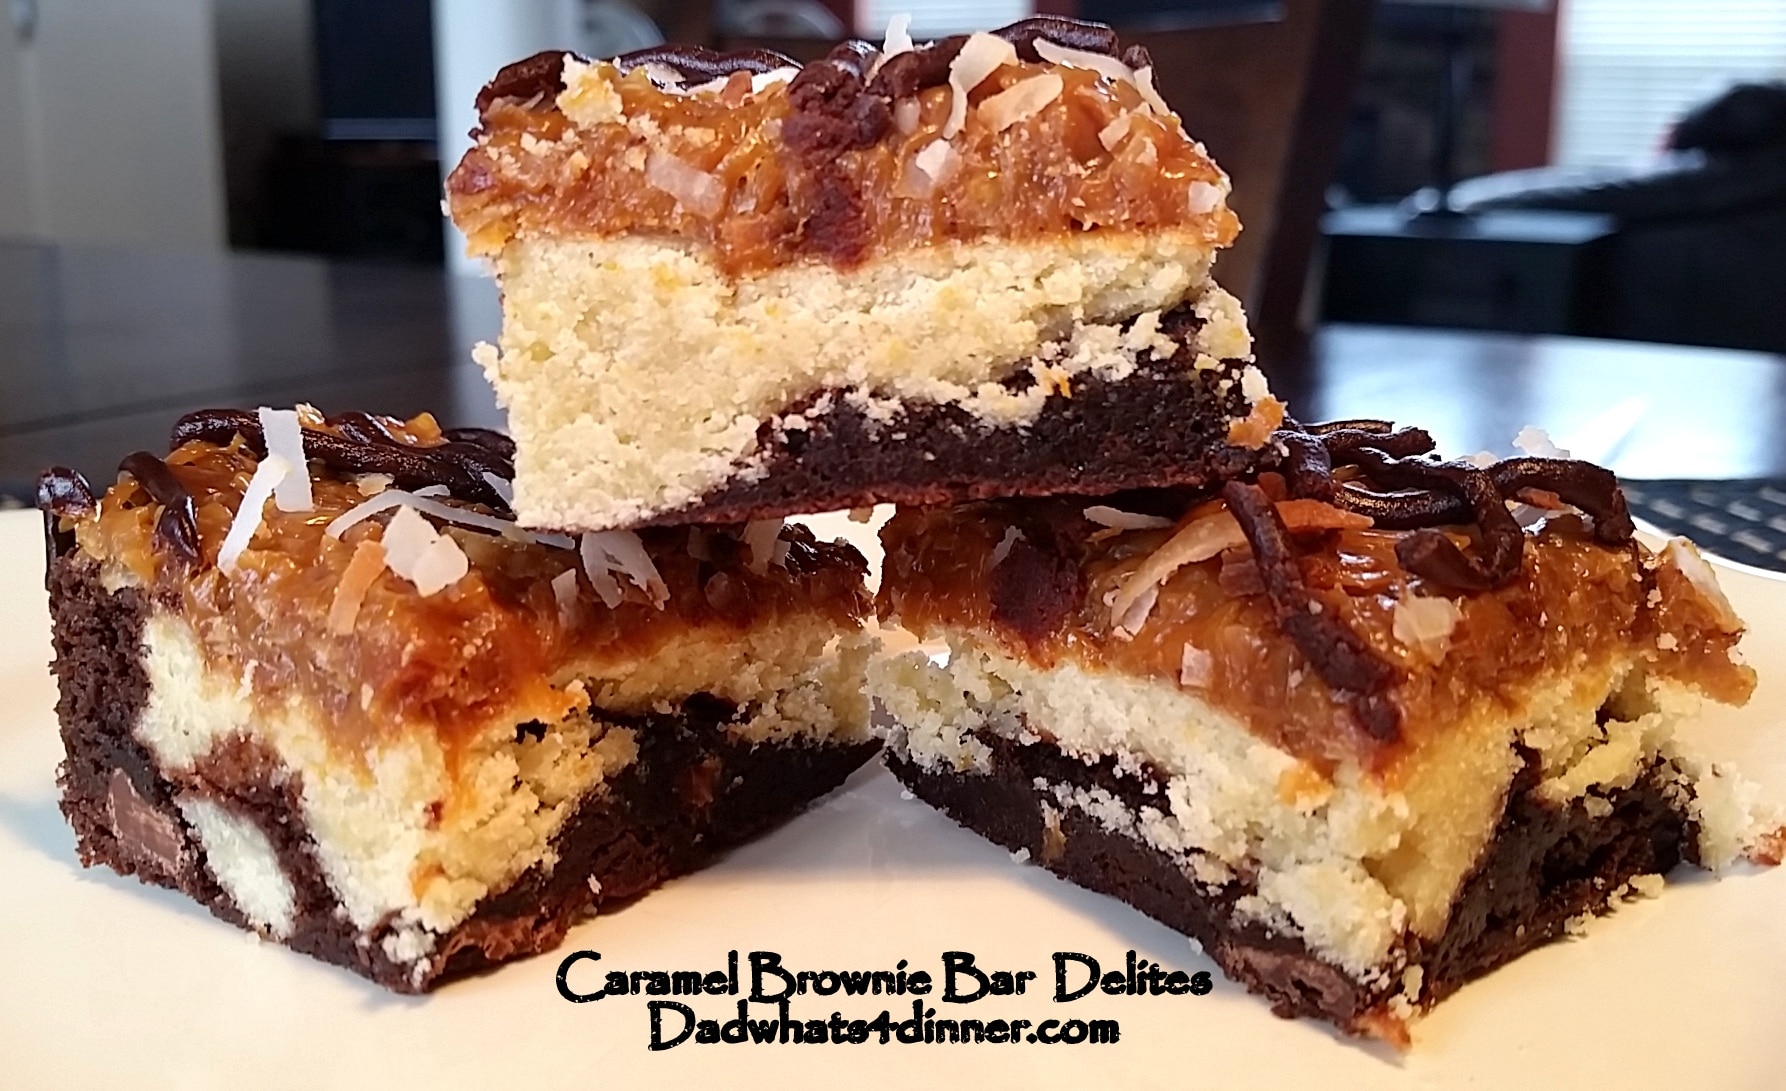 Caramel Brownie Bar DeLites | www.dadwhats4dinner.com ©